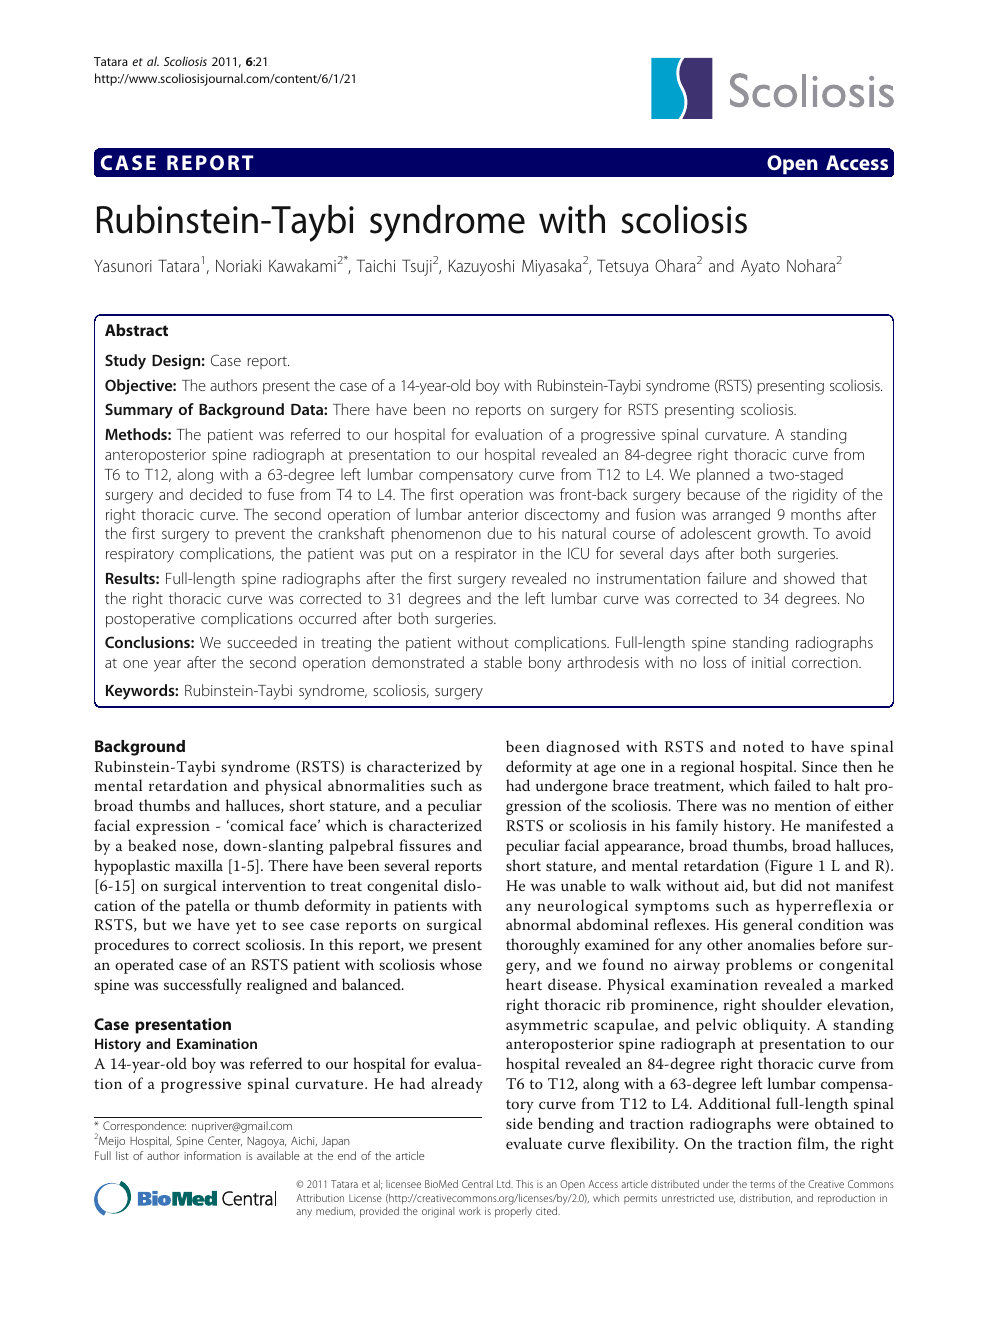 Dermatologic Manifestations of Rubinstein-Taybi Syndrome Clinical  Presentation: History, Physical Examination, Complications